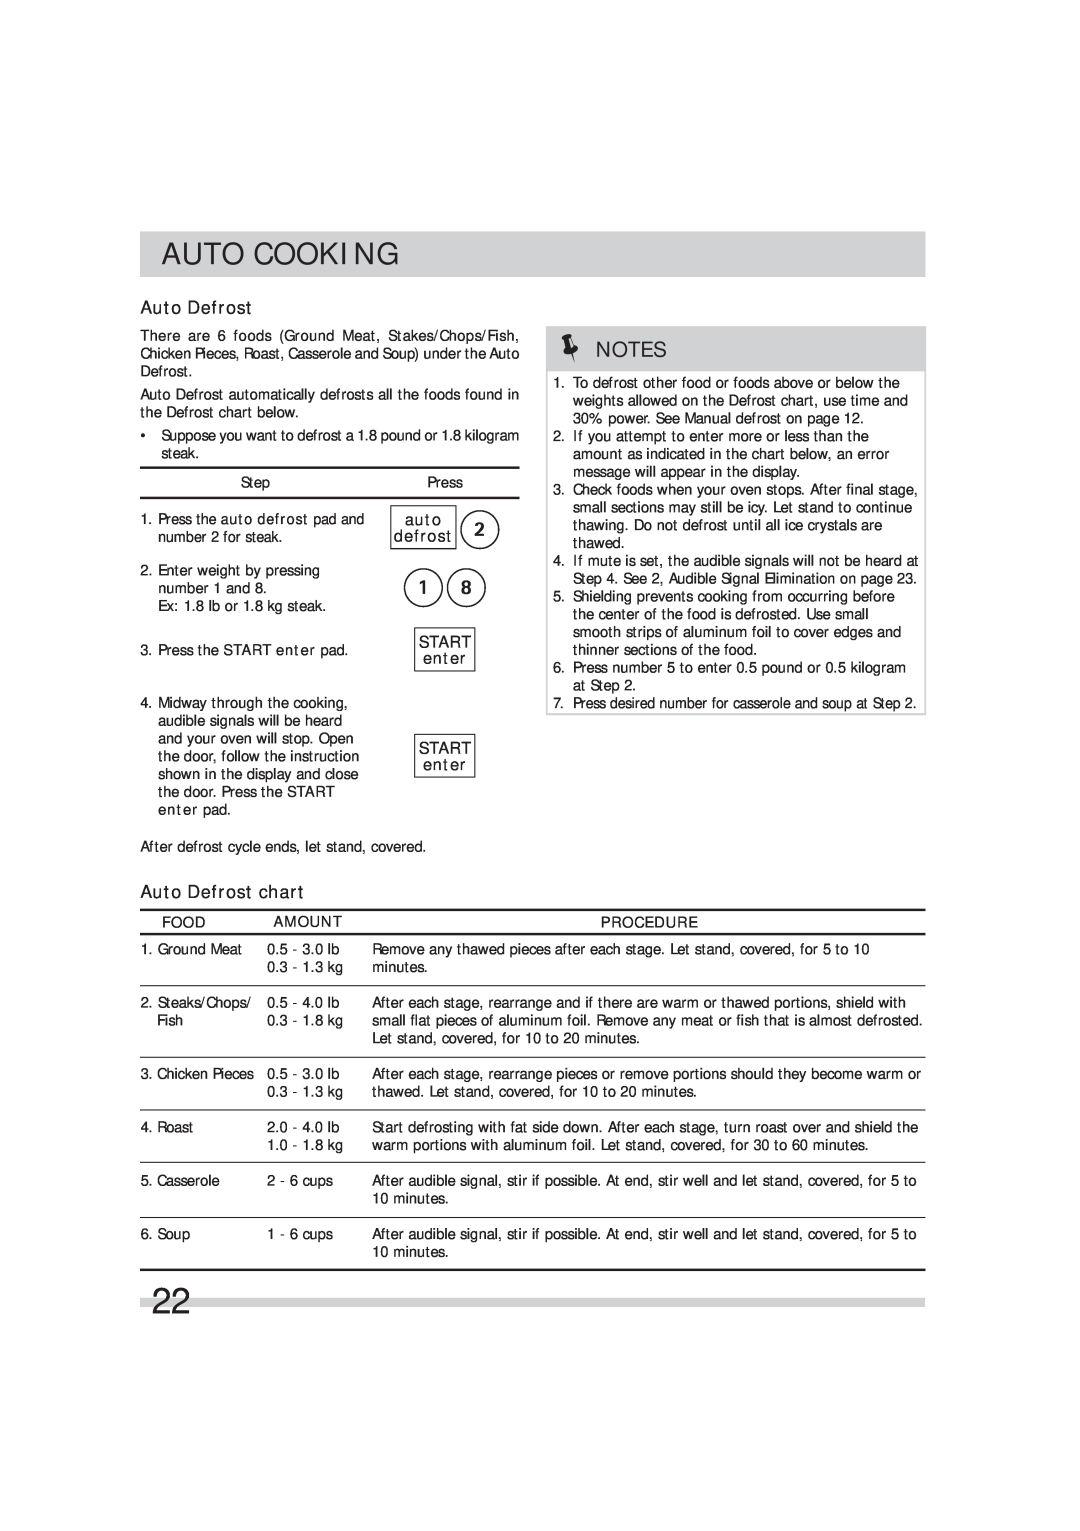 Frigidaire 316495054 Auto Defrost chart, defrost, Auto Cooking, auto, Start, enter pad, Food, Amount, Procedure 